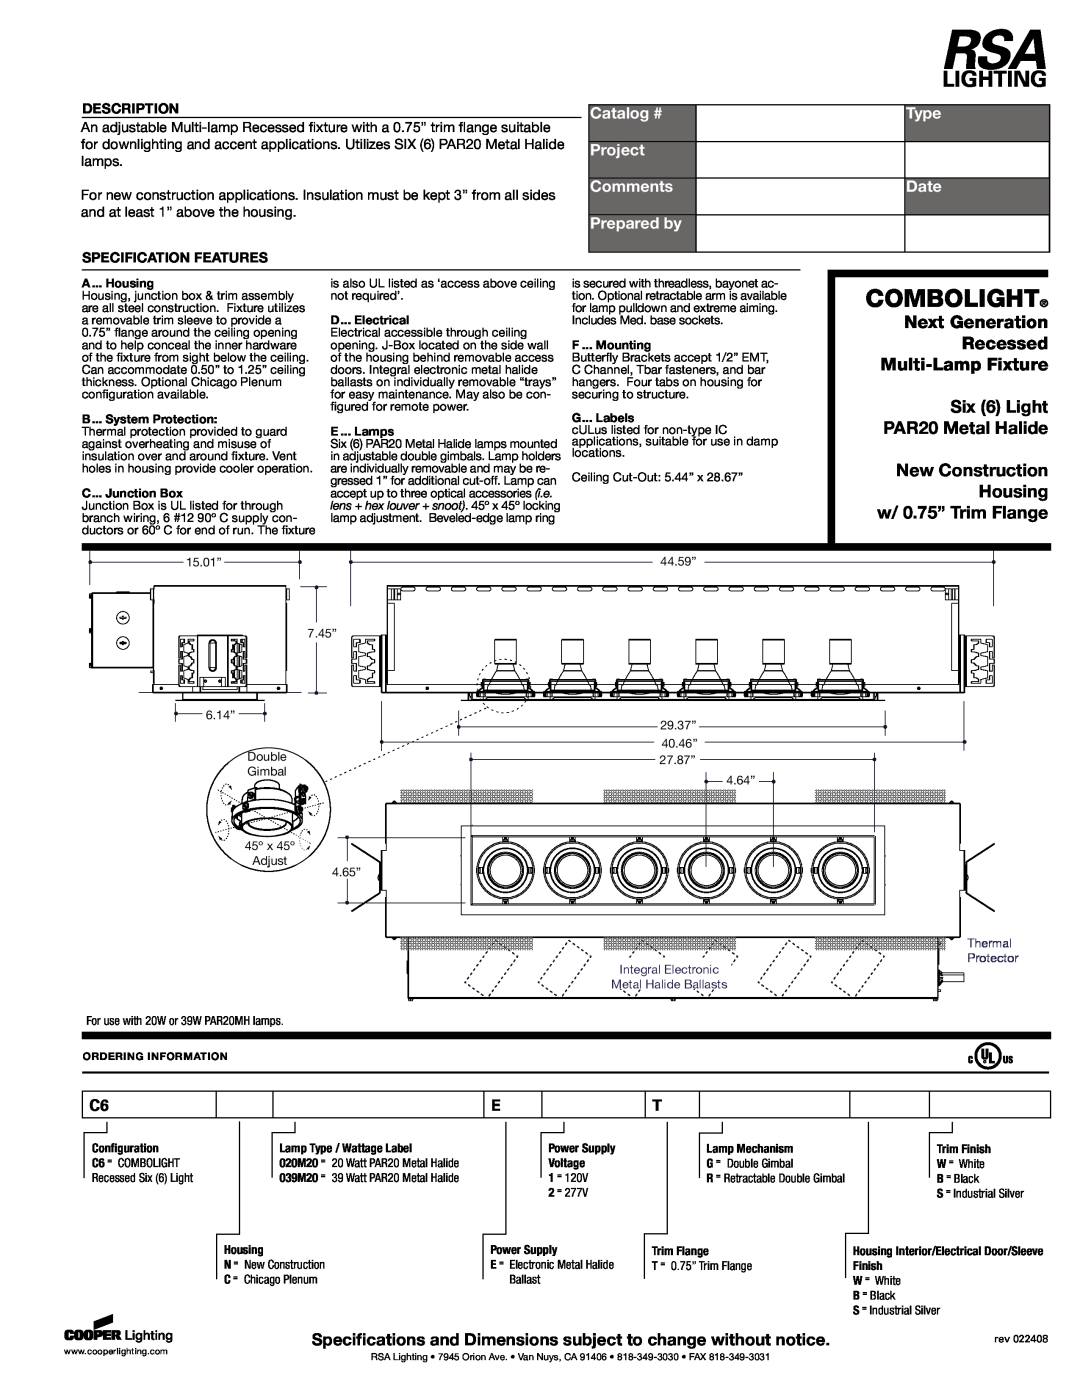 RSA Lighting 62-14410001 specifications Combolight, Next Generation Recessed Multi-LampFixture, Type Date, Description 